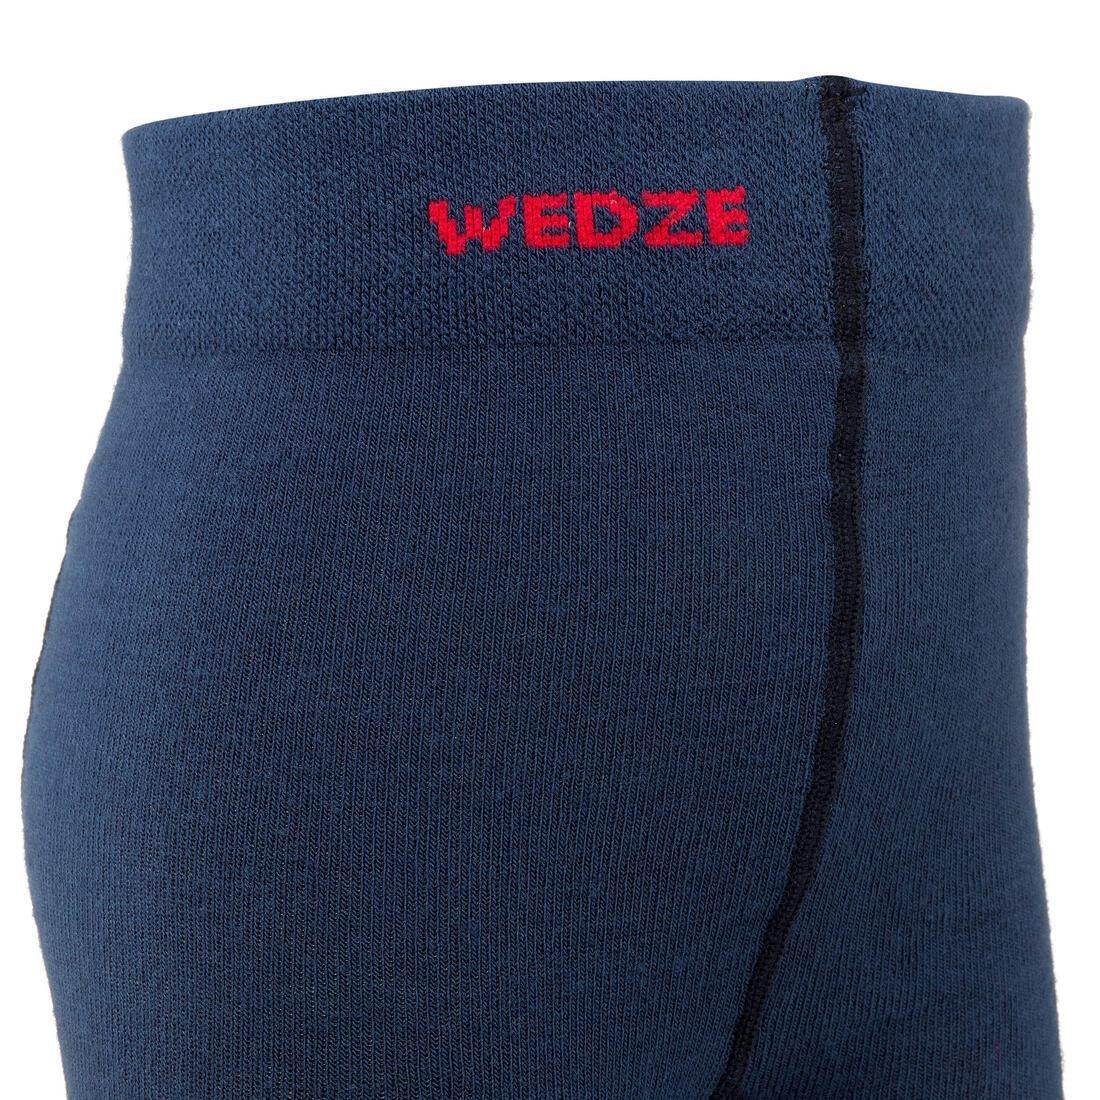 WEDZE - Junior Ski Tights-Socks, Blue